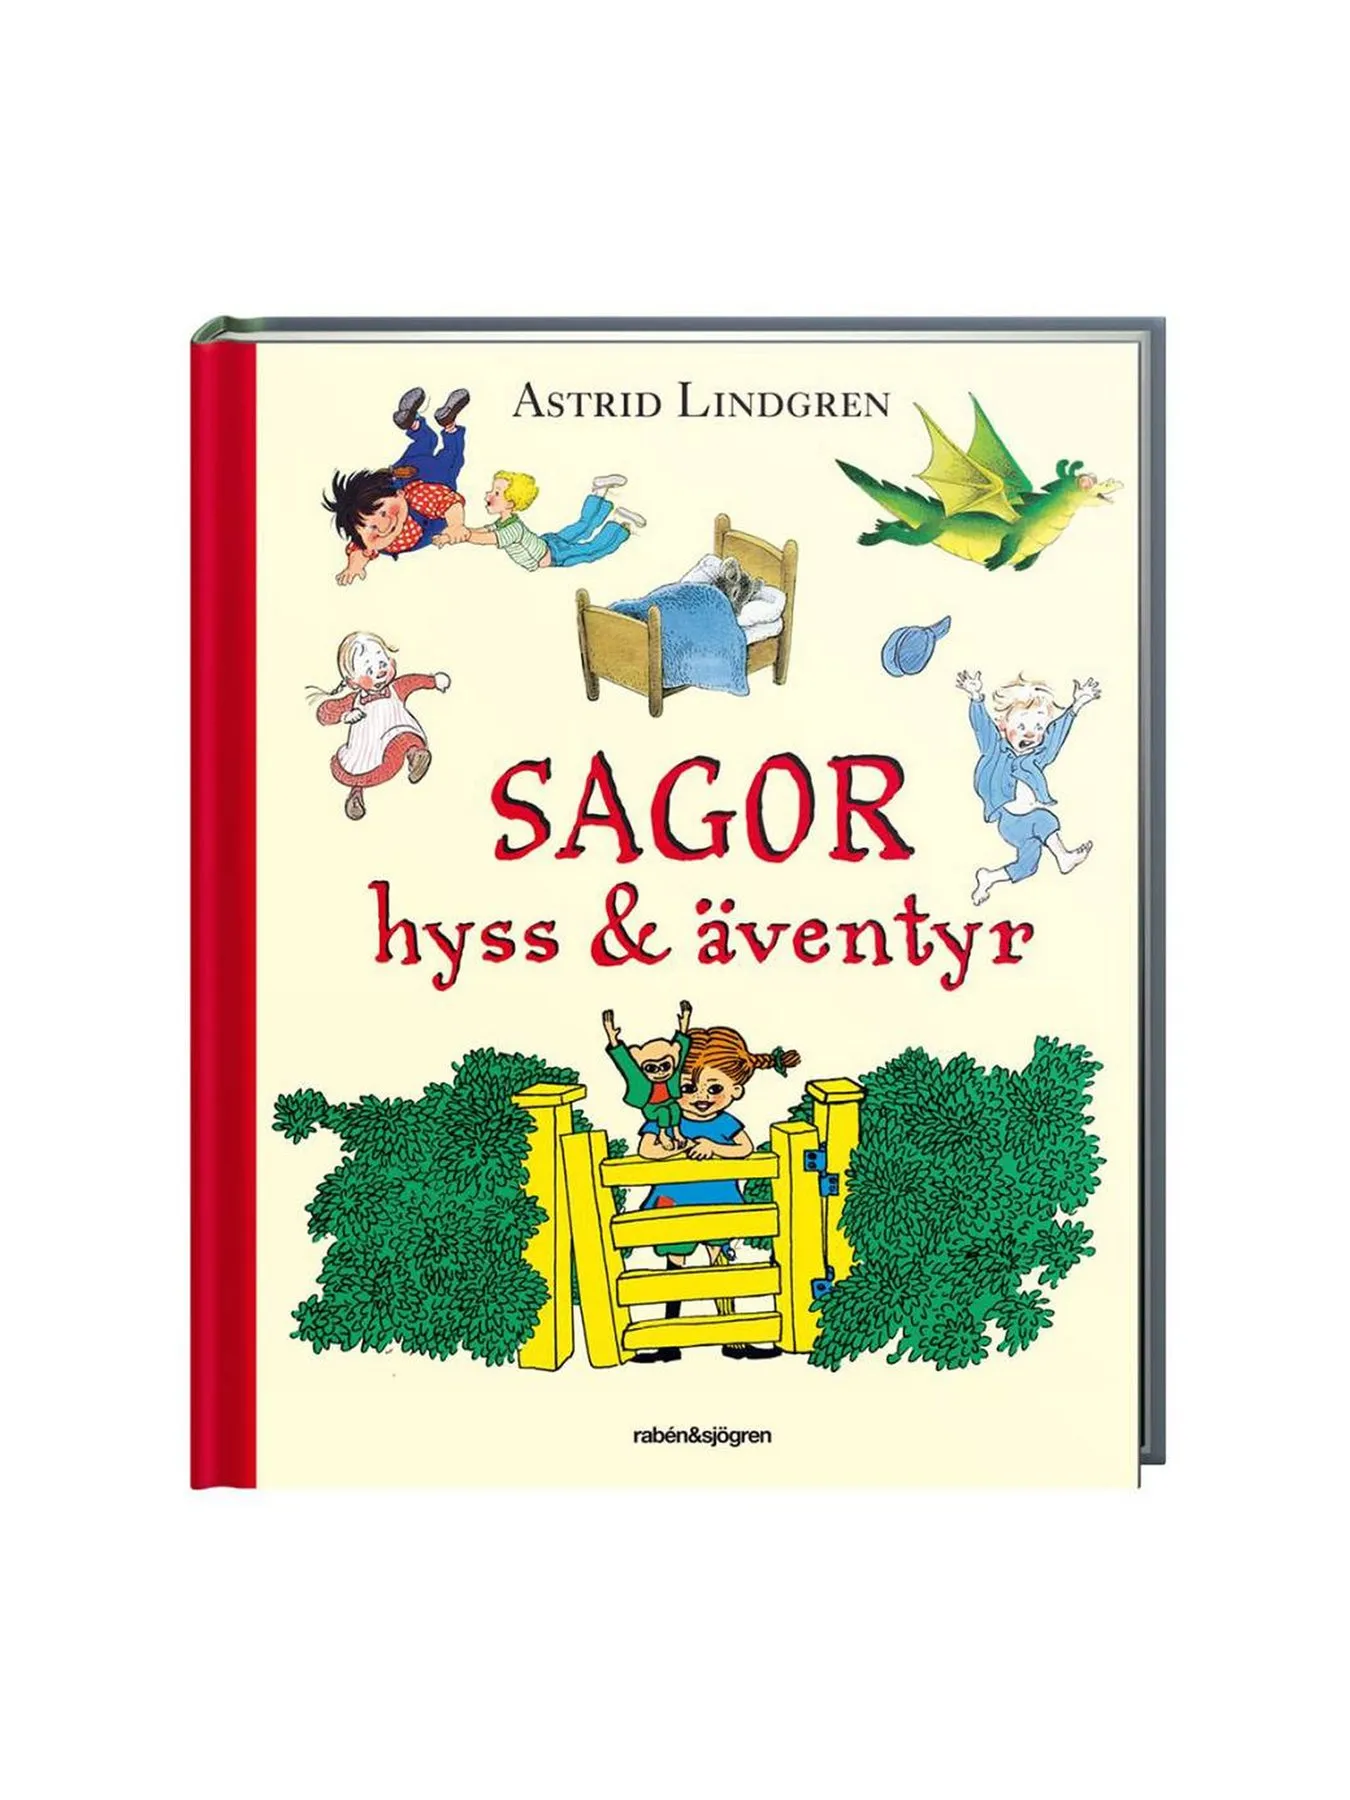 Book Astrid Lindgren Sagas & adventures